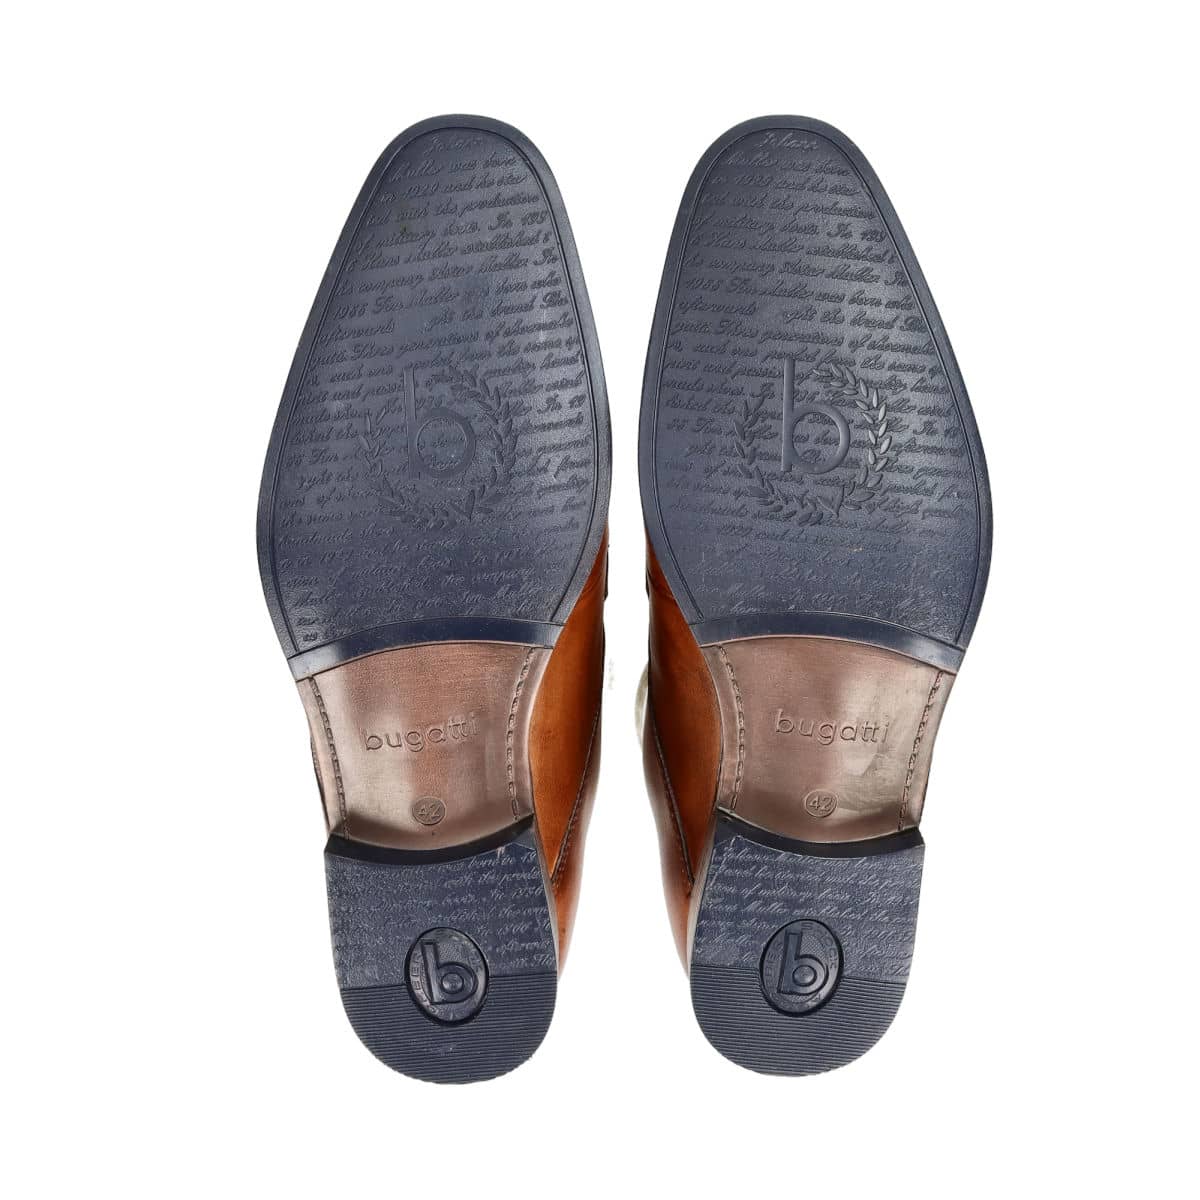 Bugatti men\'s leather formal shoes - cognac brown